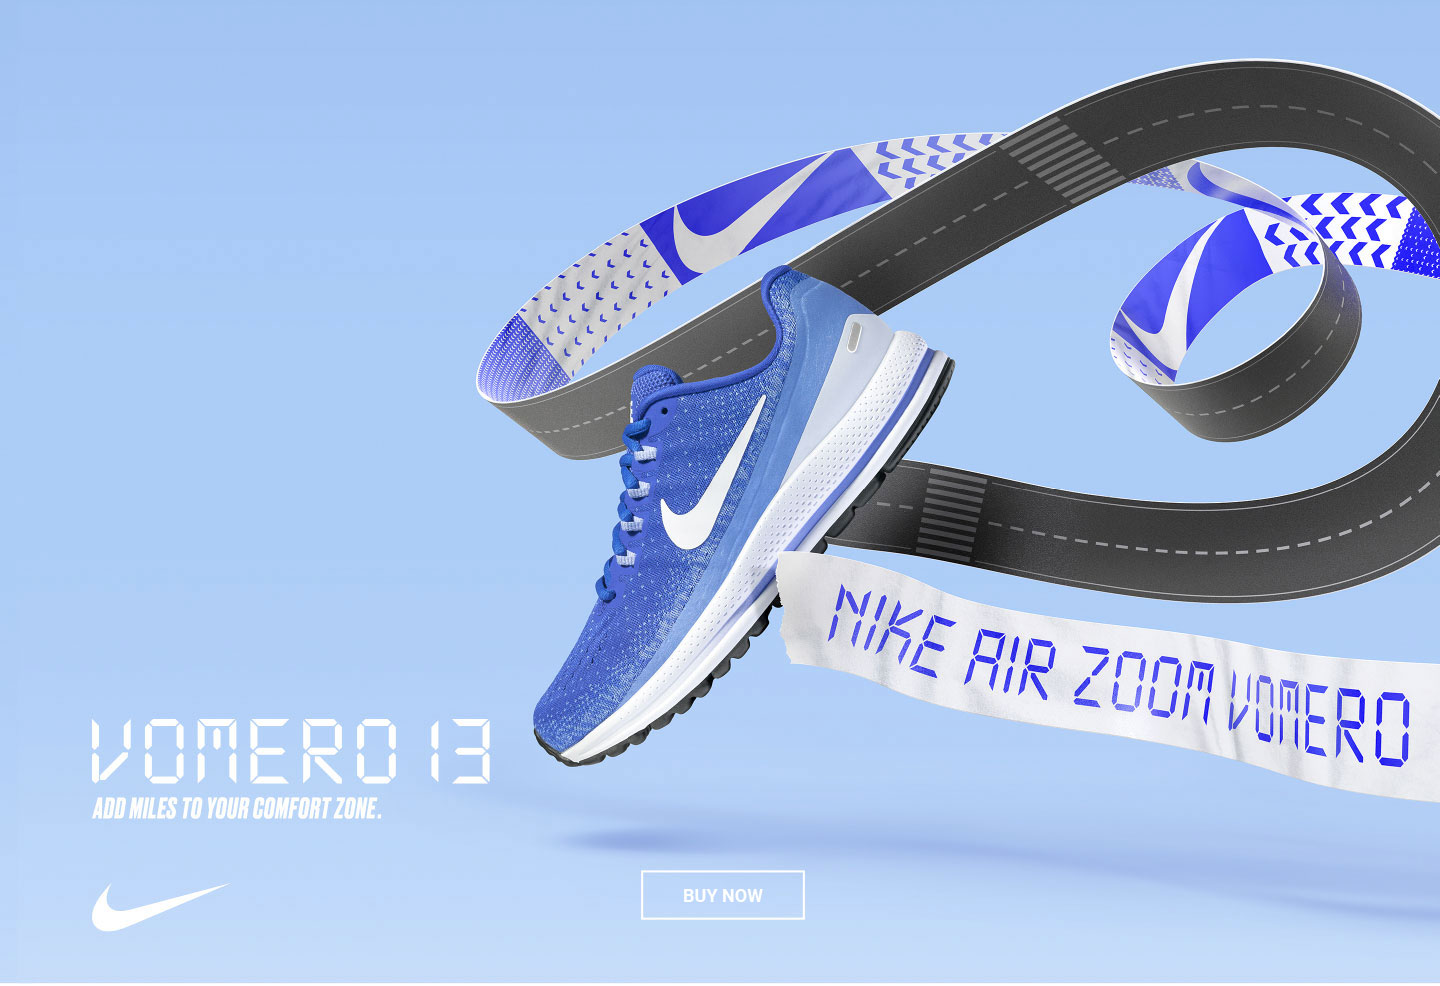 Nike Vomero 13